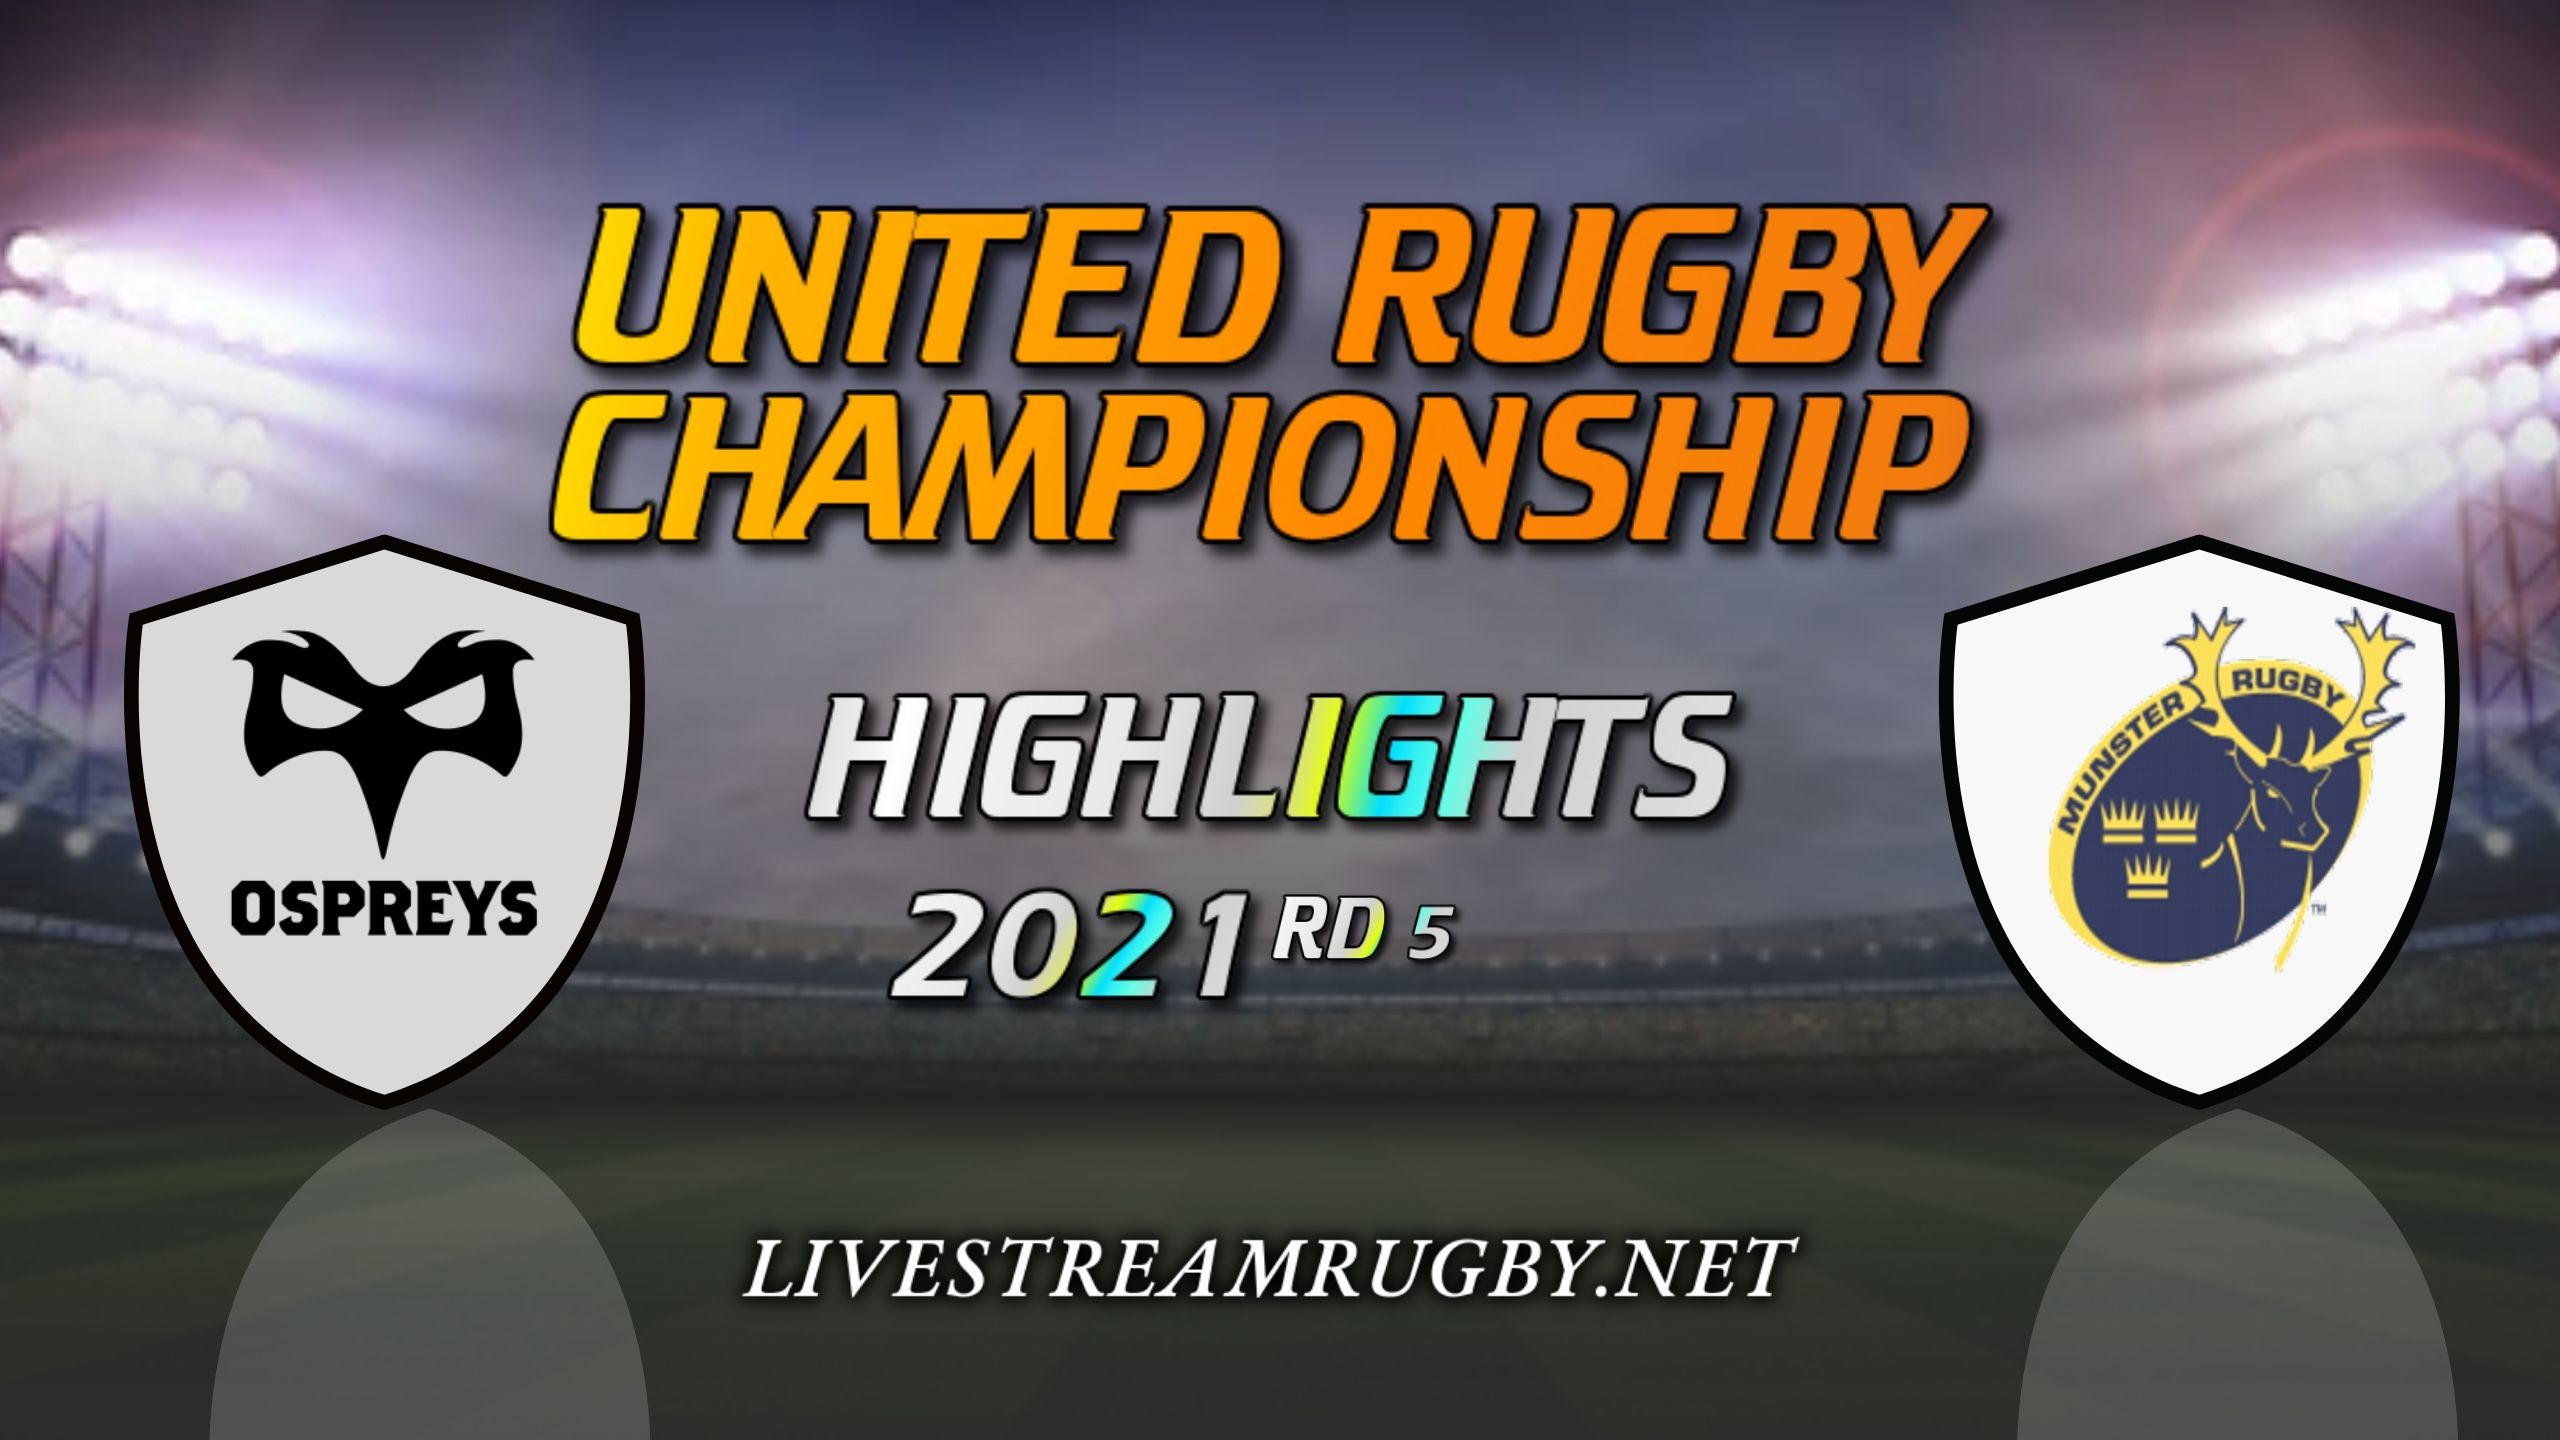 Ospreys Vs Munster Highlights 2021 Rd 5 United Rugby